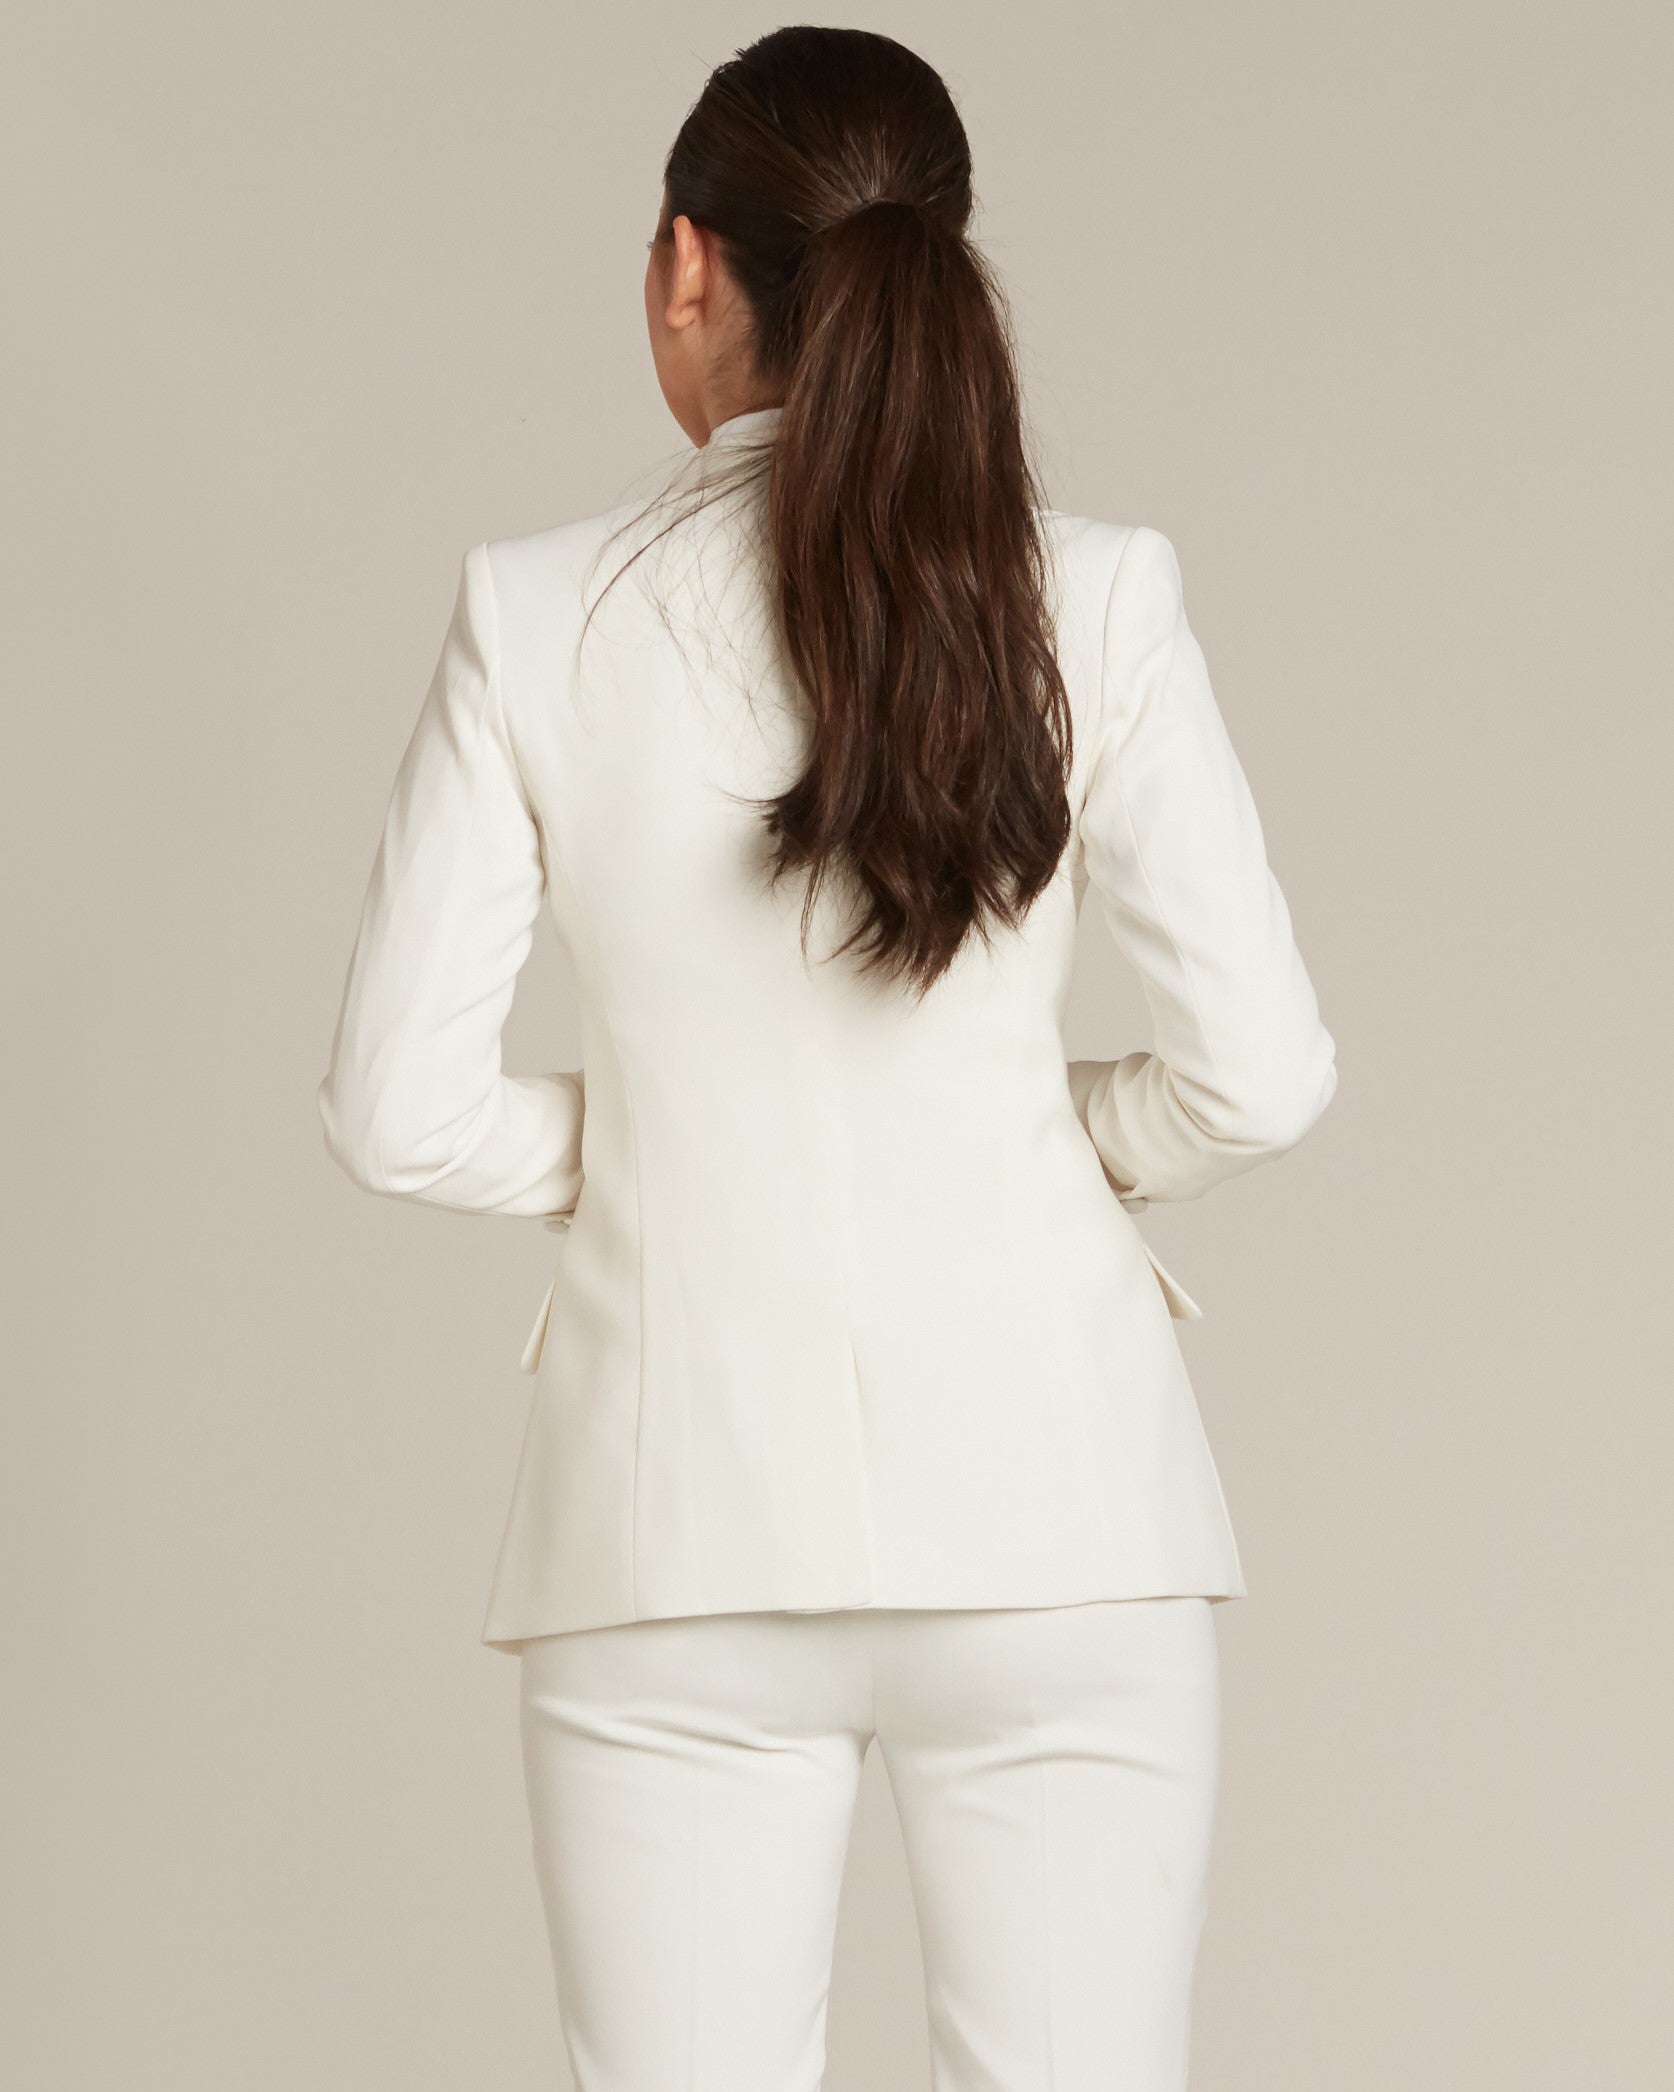 Diamond White Shawl Collar Tuxedo Jacket - Women’s Tuxedo Suits | girls prom tuxedo | gal tux | Wedding Party, Bridesmaids